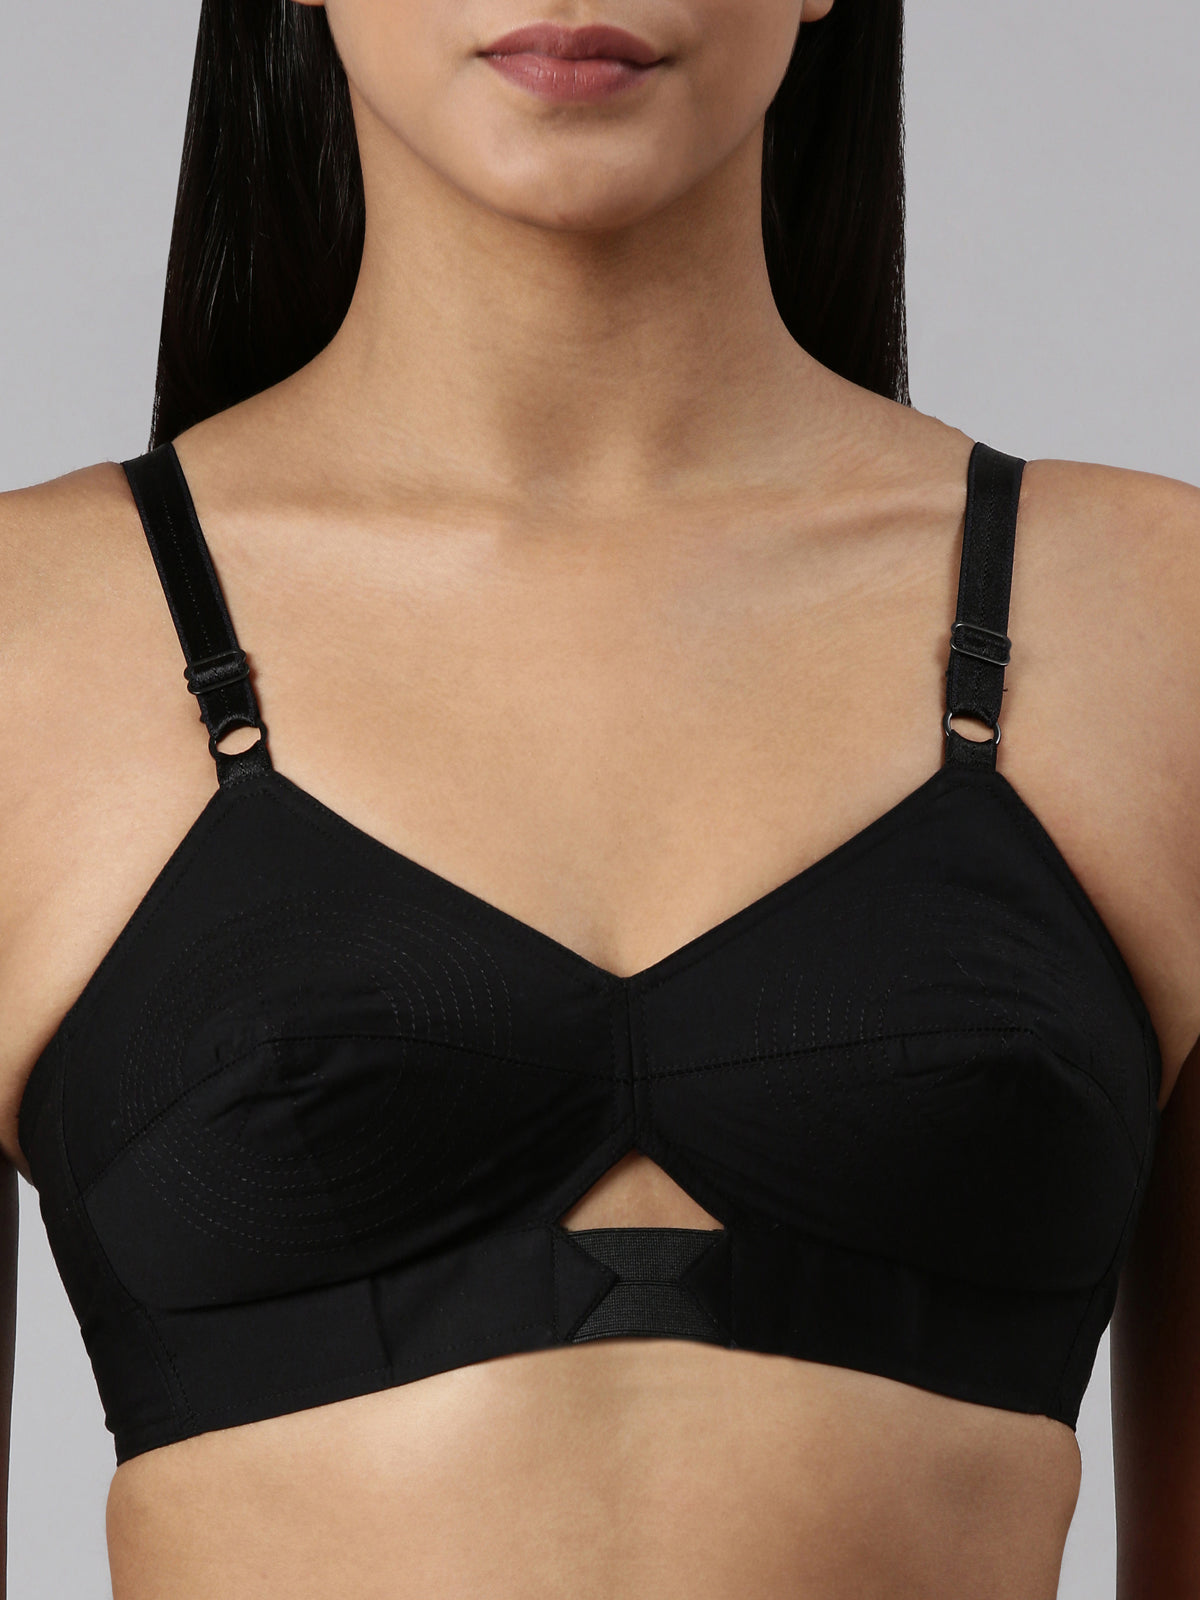 blossom-authentic bra-B Cup-black1-Woven cotton-everyday bra